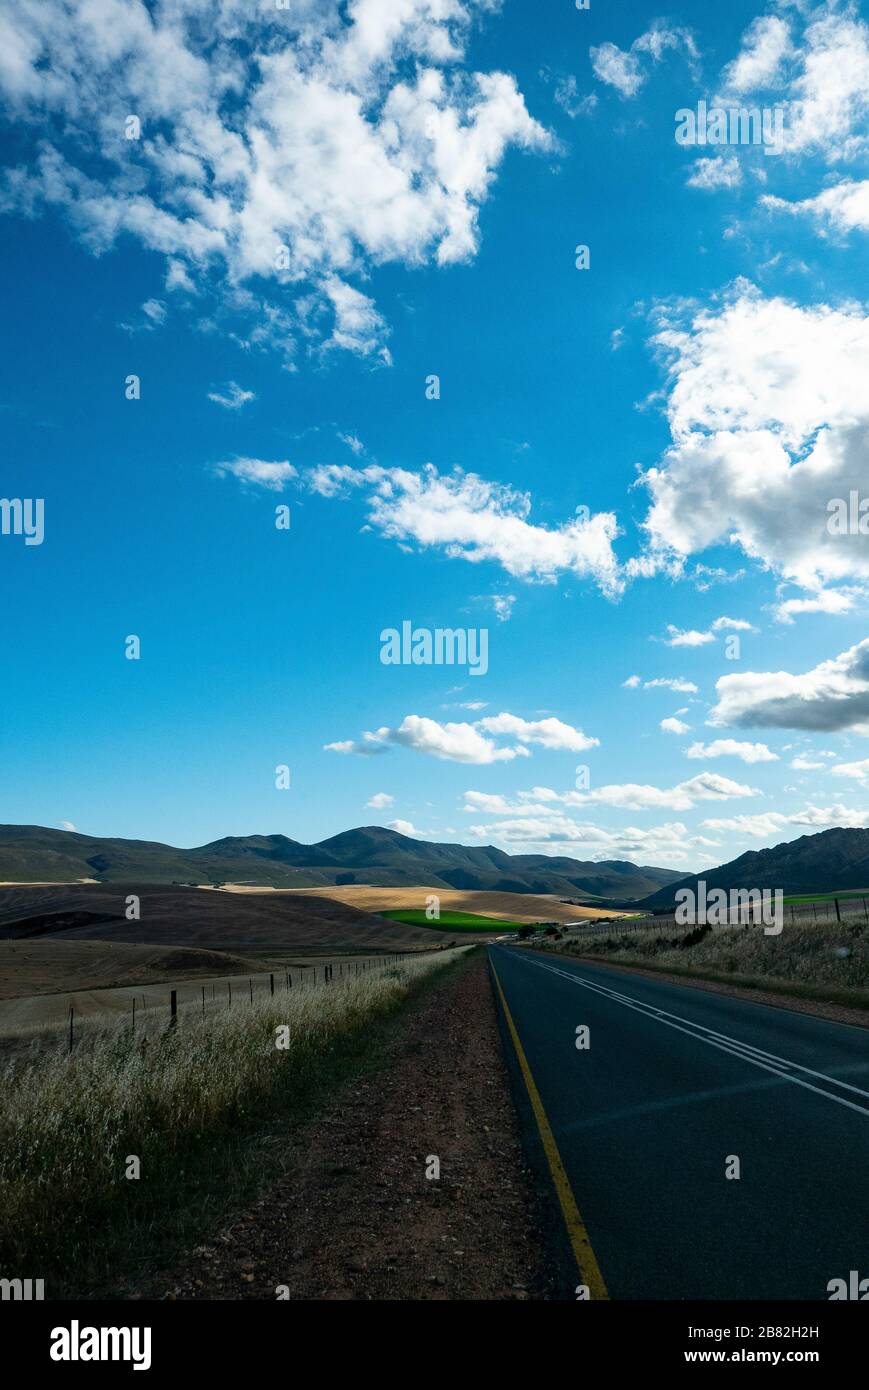 Asphalt Road and Rural Landscape, South Africa Stock Photo